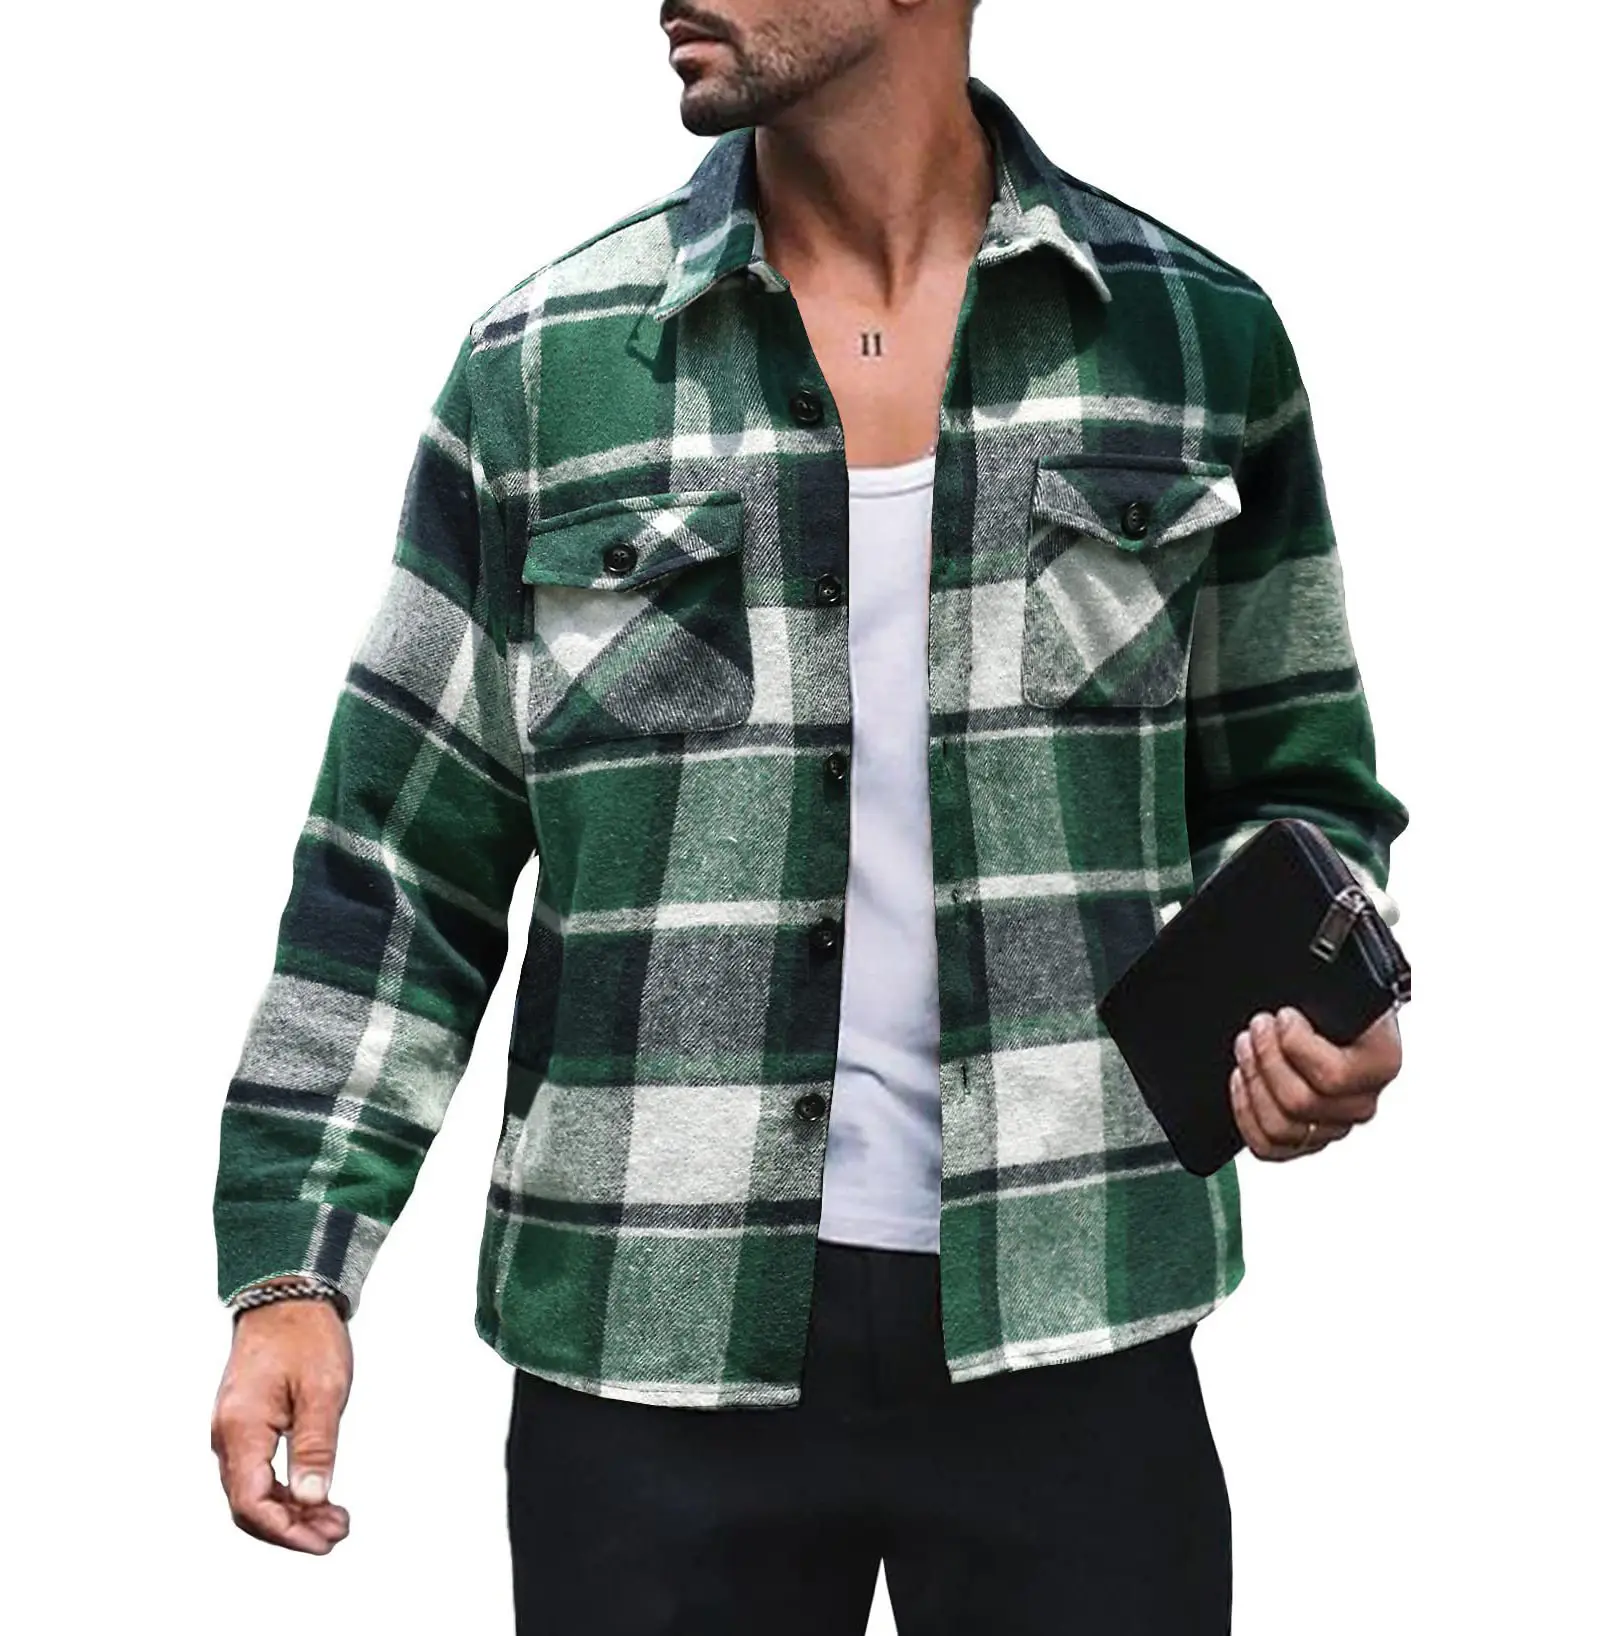 Men's long sleeve shirts coat custom fashion Plaid shirt with buttons